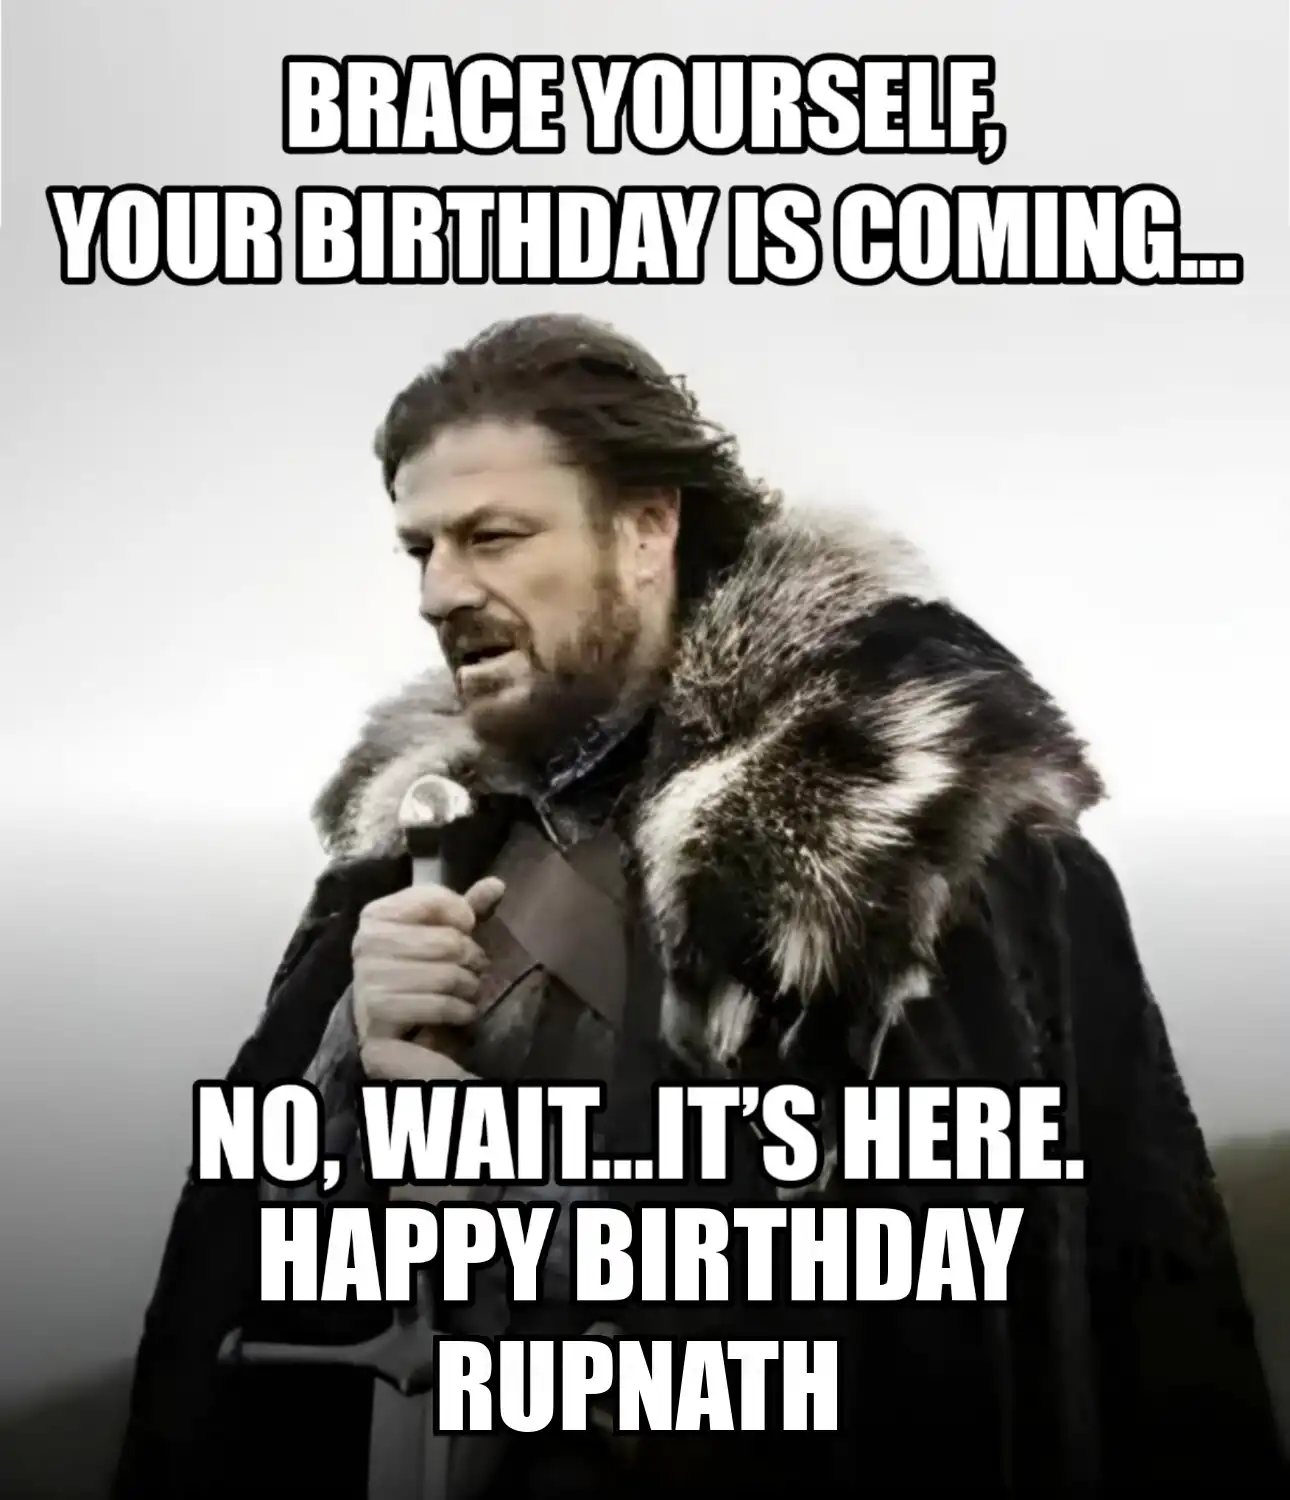 Happy Birthday Rupnath Brace Yourself Your Birthday Is Coming Meme